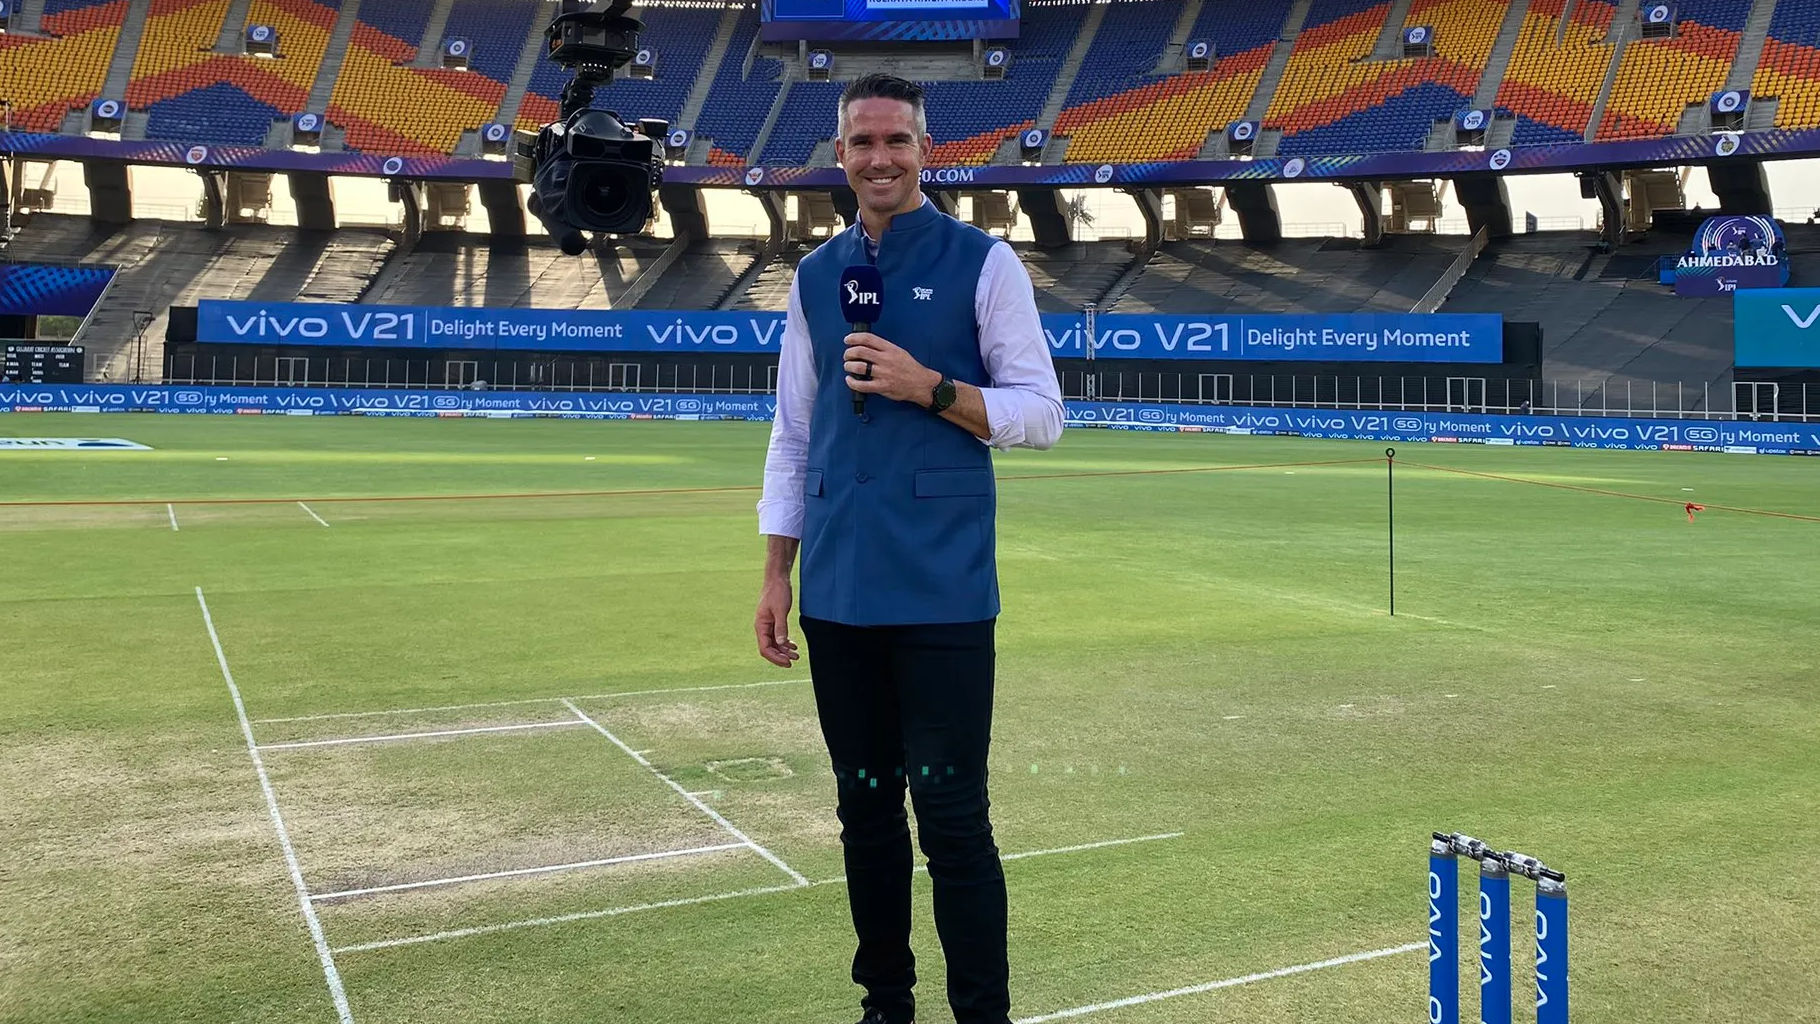 Copy Ravindra Jadeja: Kevin Pietersen’s advice to aspiring England cricketers